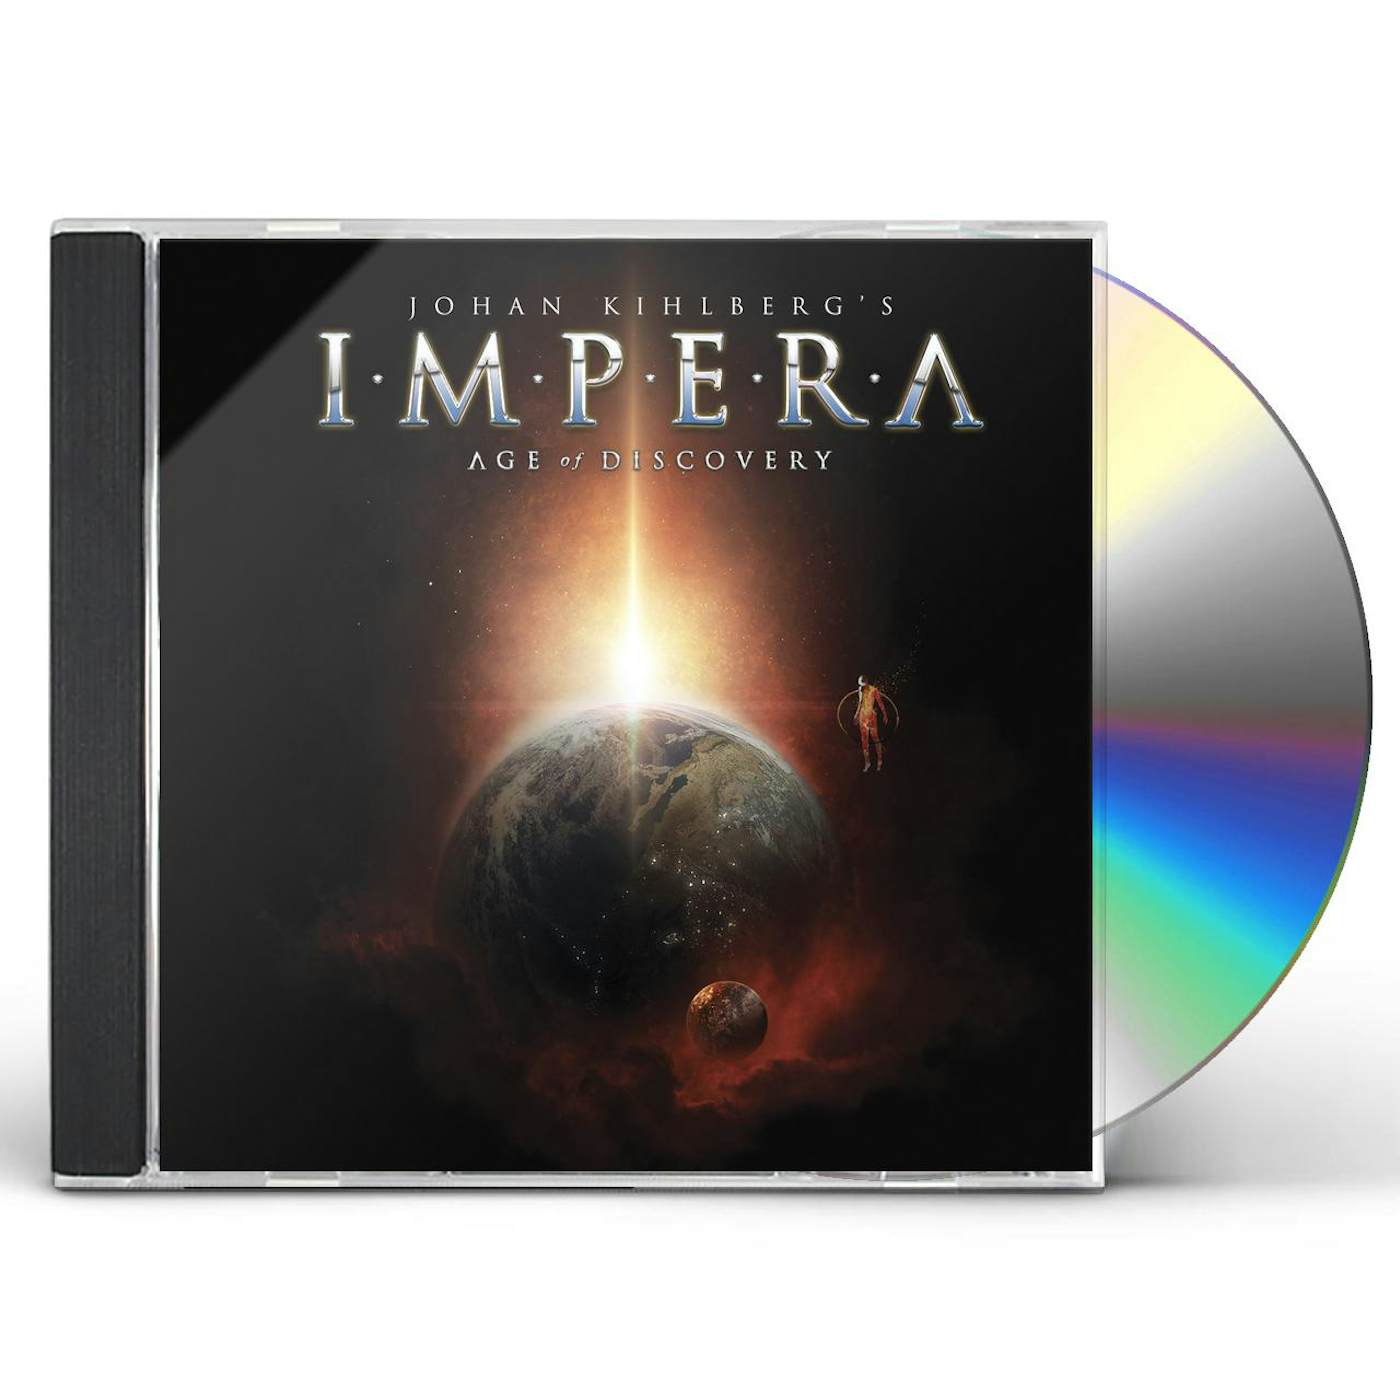 Johan Kihlberg's Impera AGE OF DISCOVERY CD